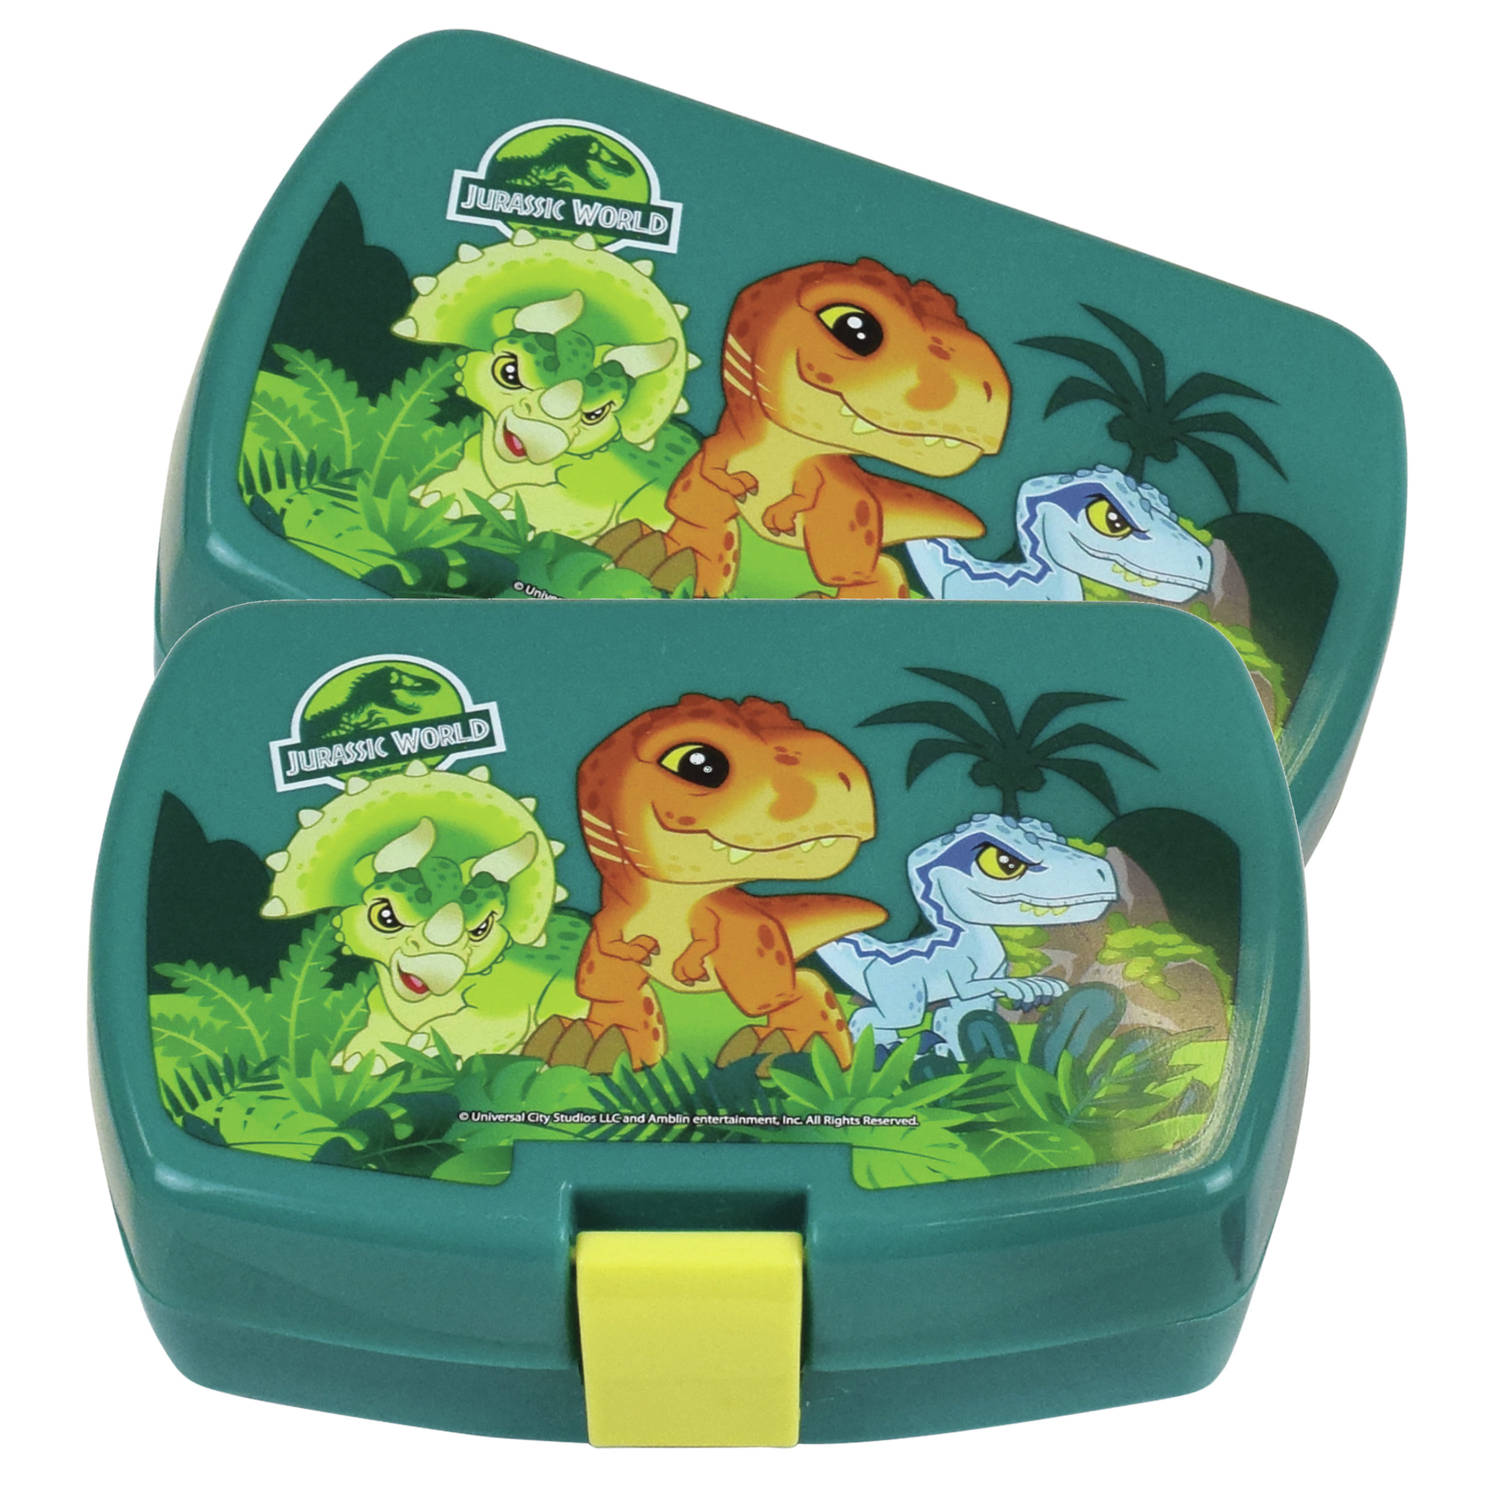 2x Stuks Kunststof Broodtrommels-lunchboxen Jurassic Park Dinosaurus 16 X 11 Cm Lunchboxen